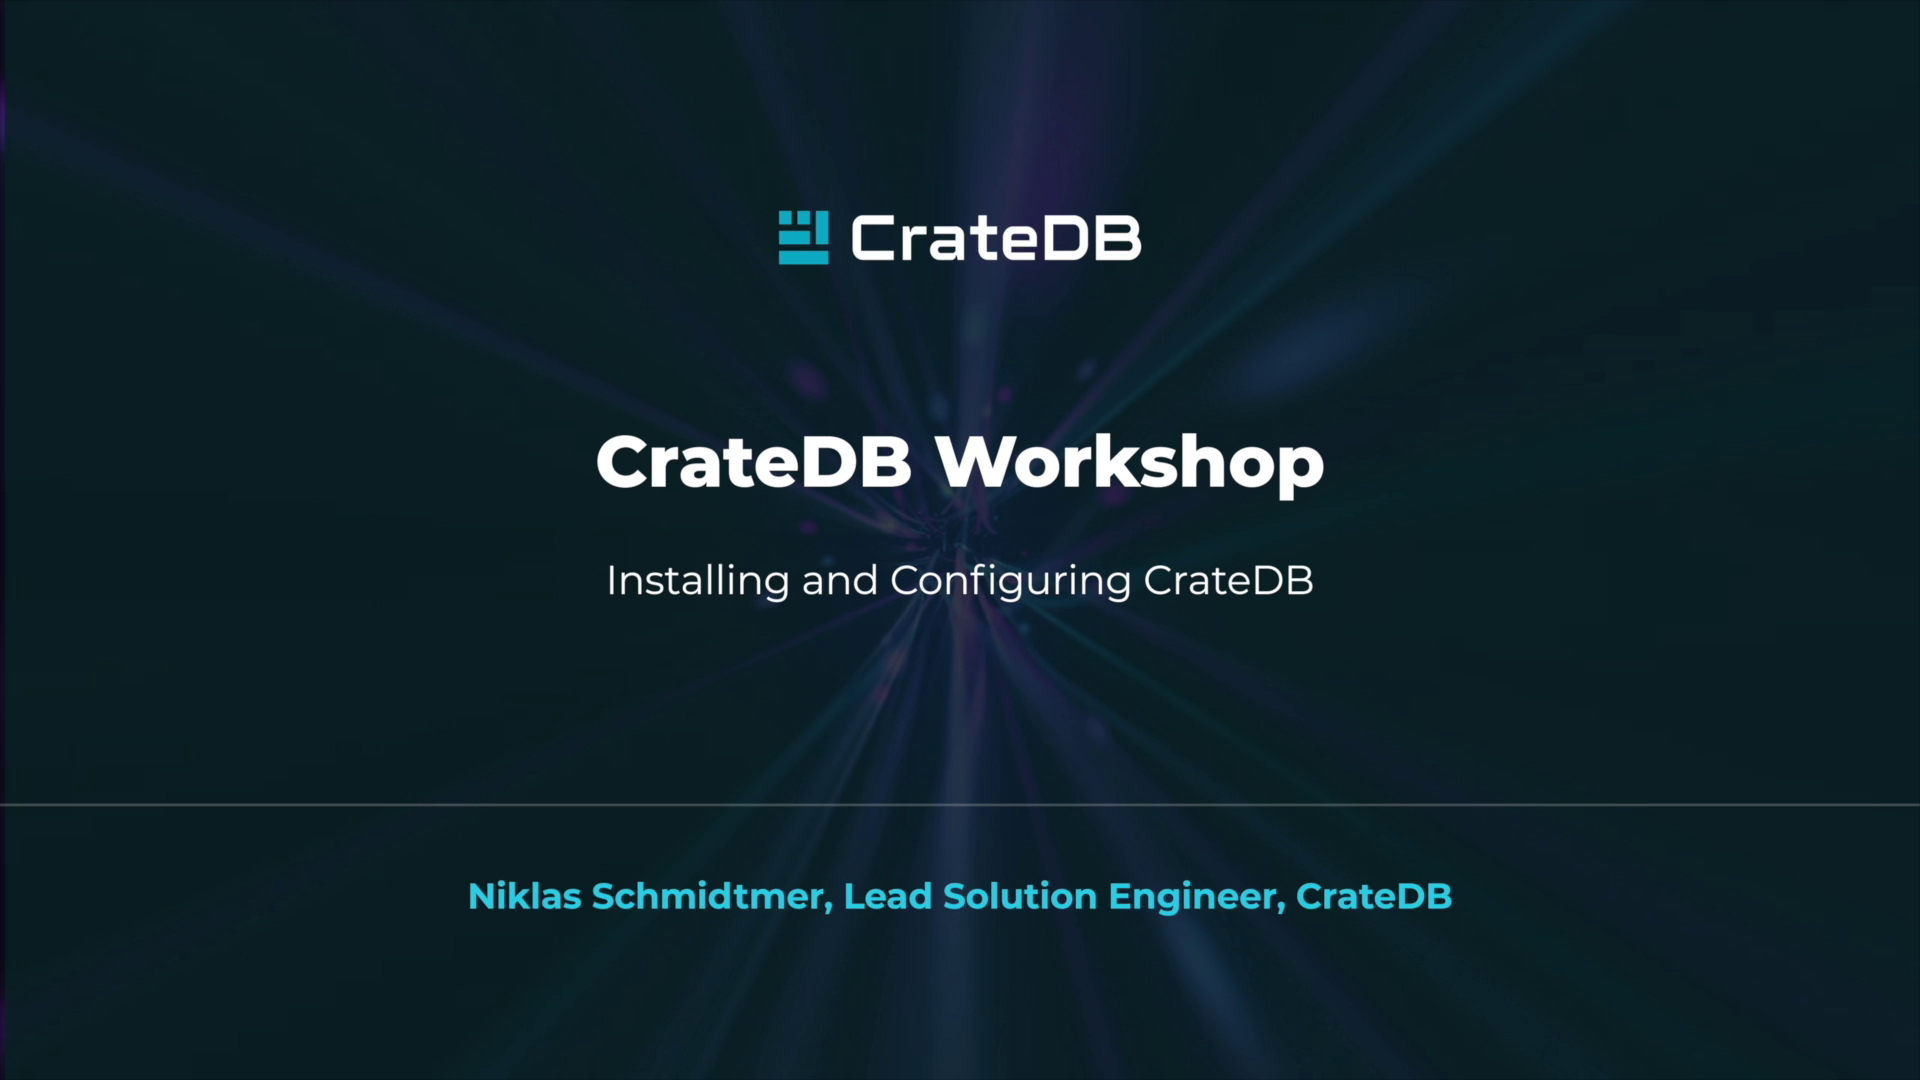 CrateDB Workshop: Installing and Configuring CrateDB